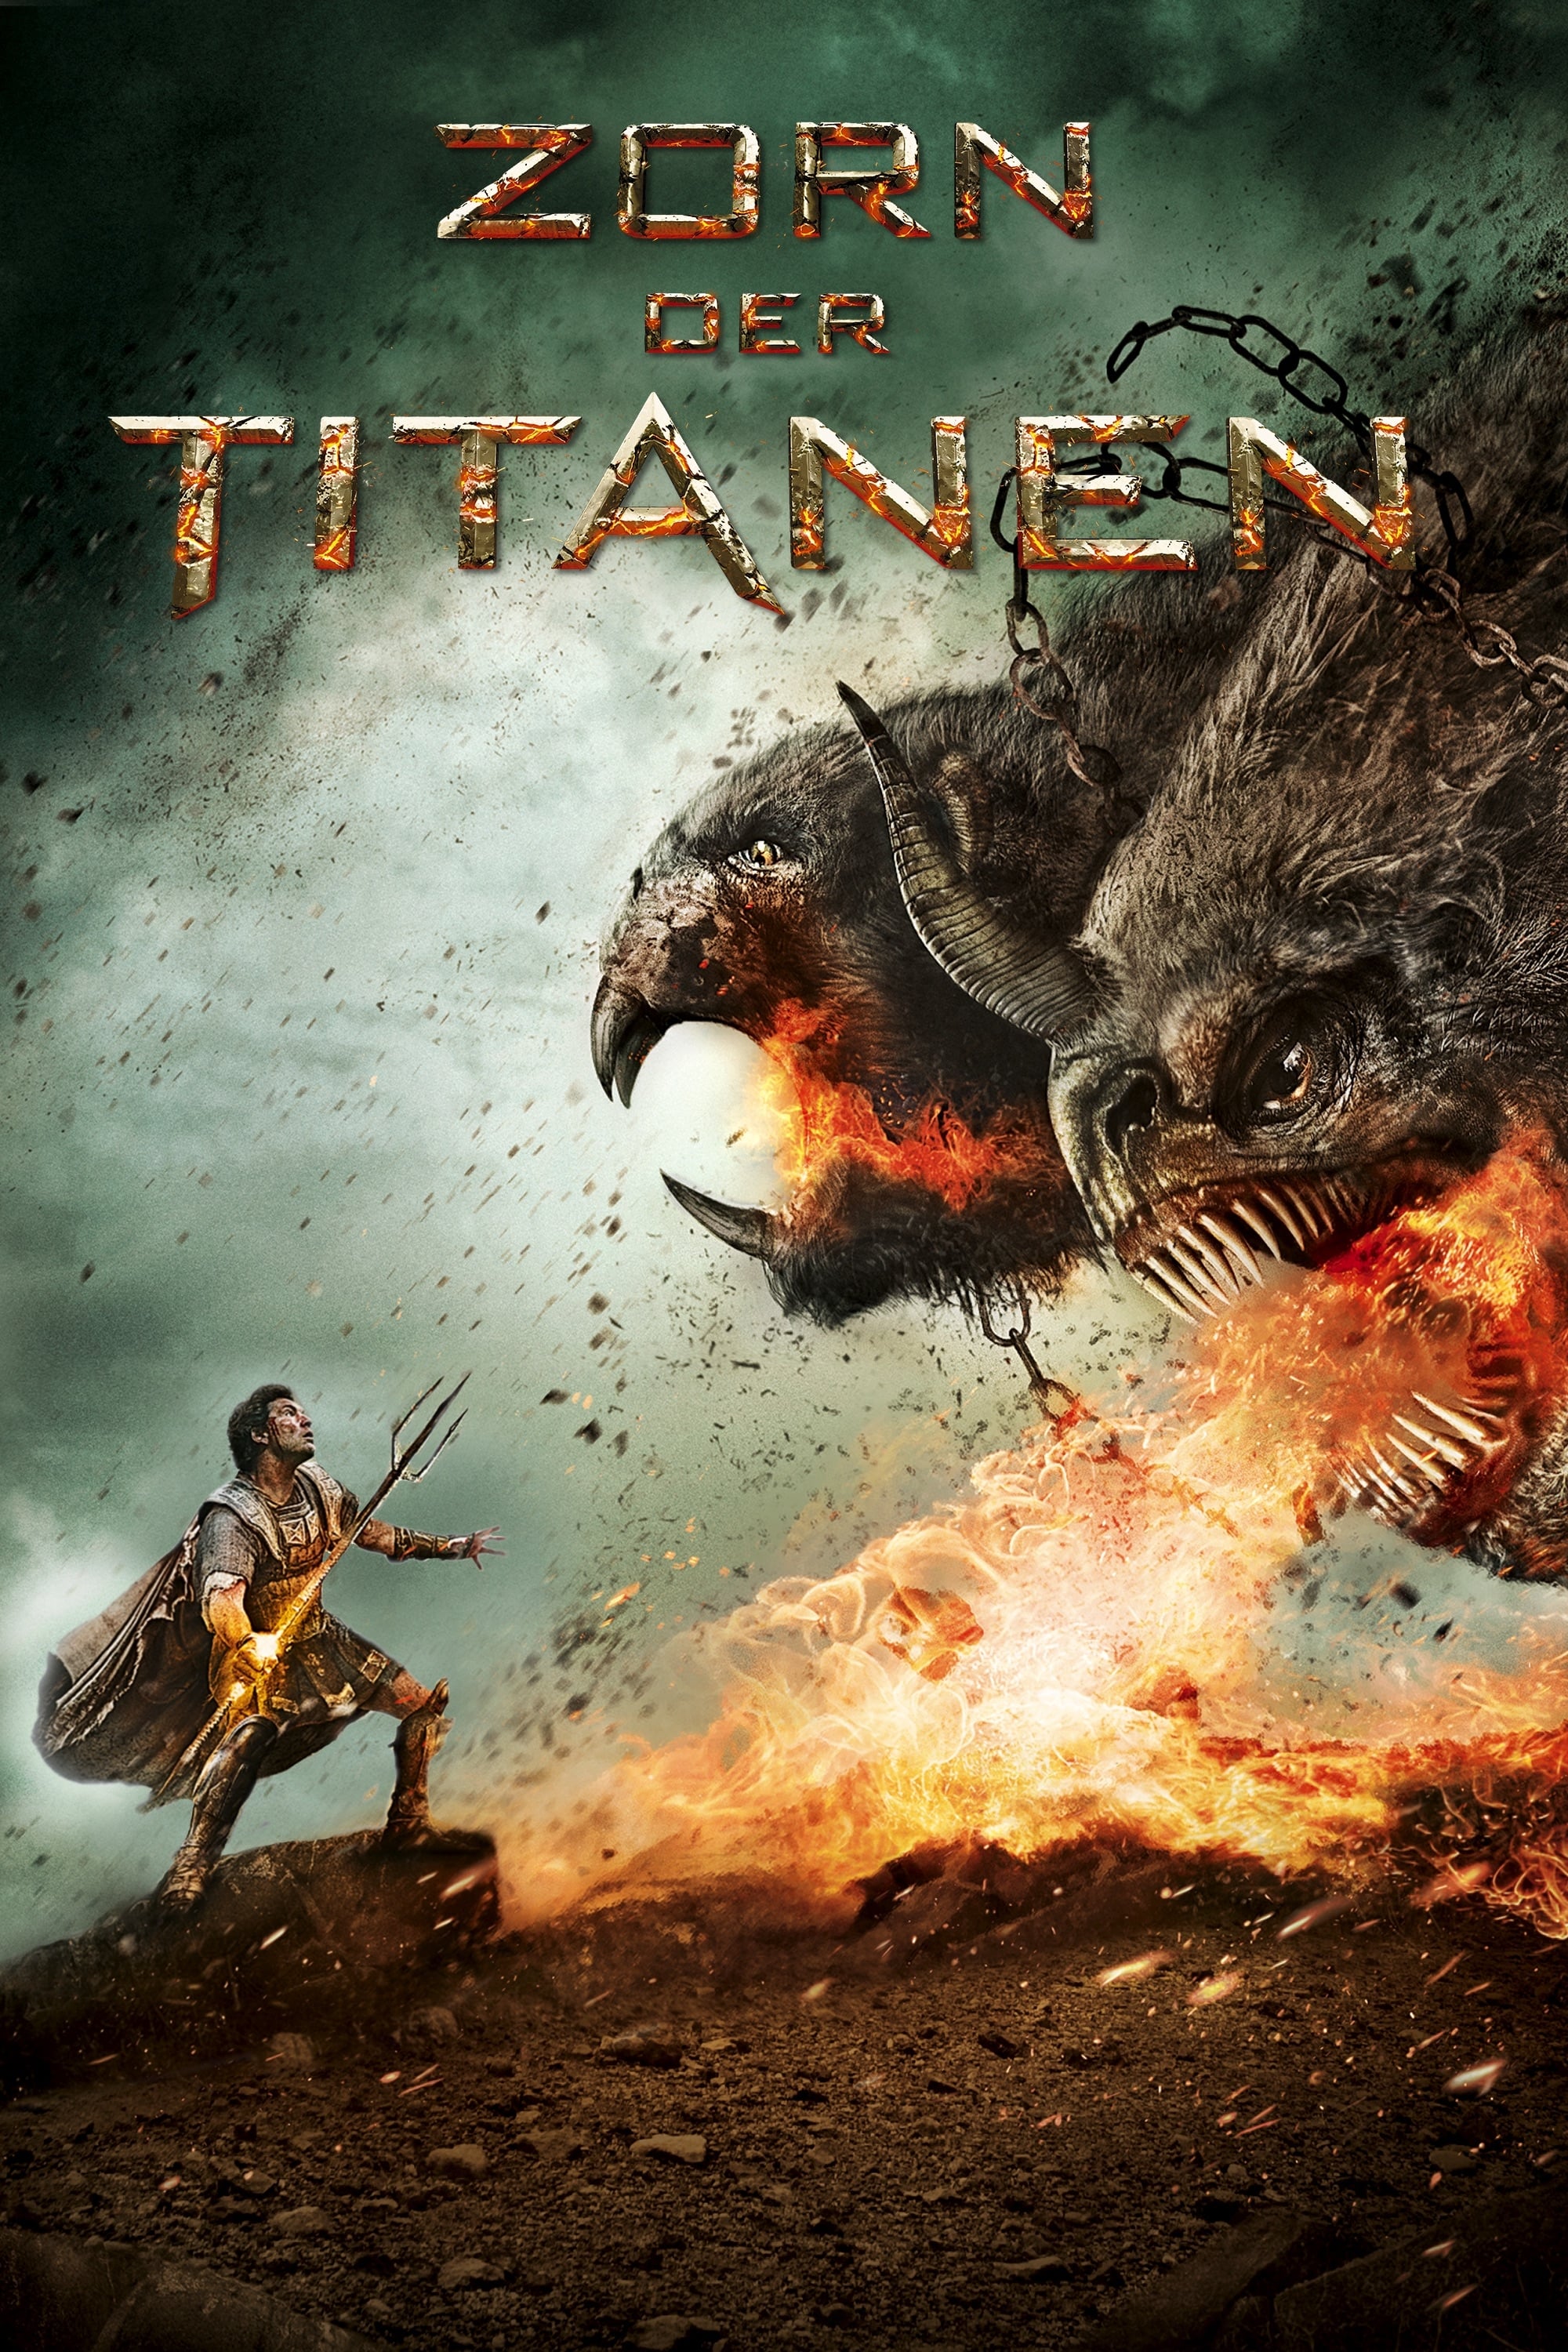 Wrath of the Titans (2012)